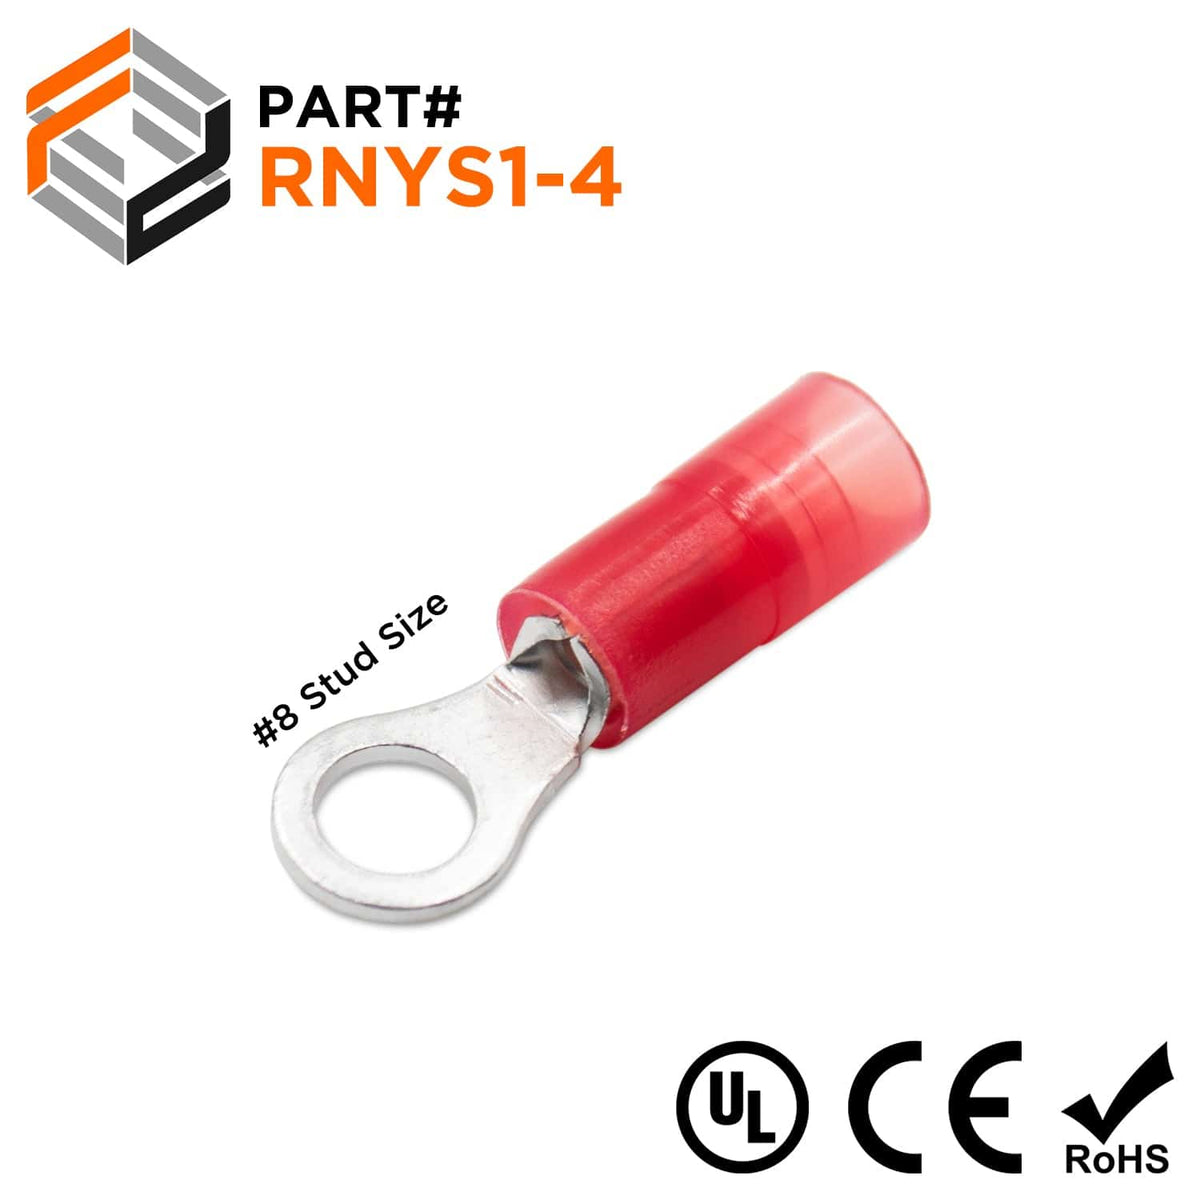 RNYS1-4 Nylon Ring Terminals - Standard Crimp 22-16AWG - Stud #8